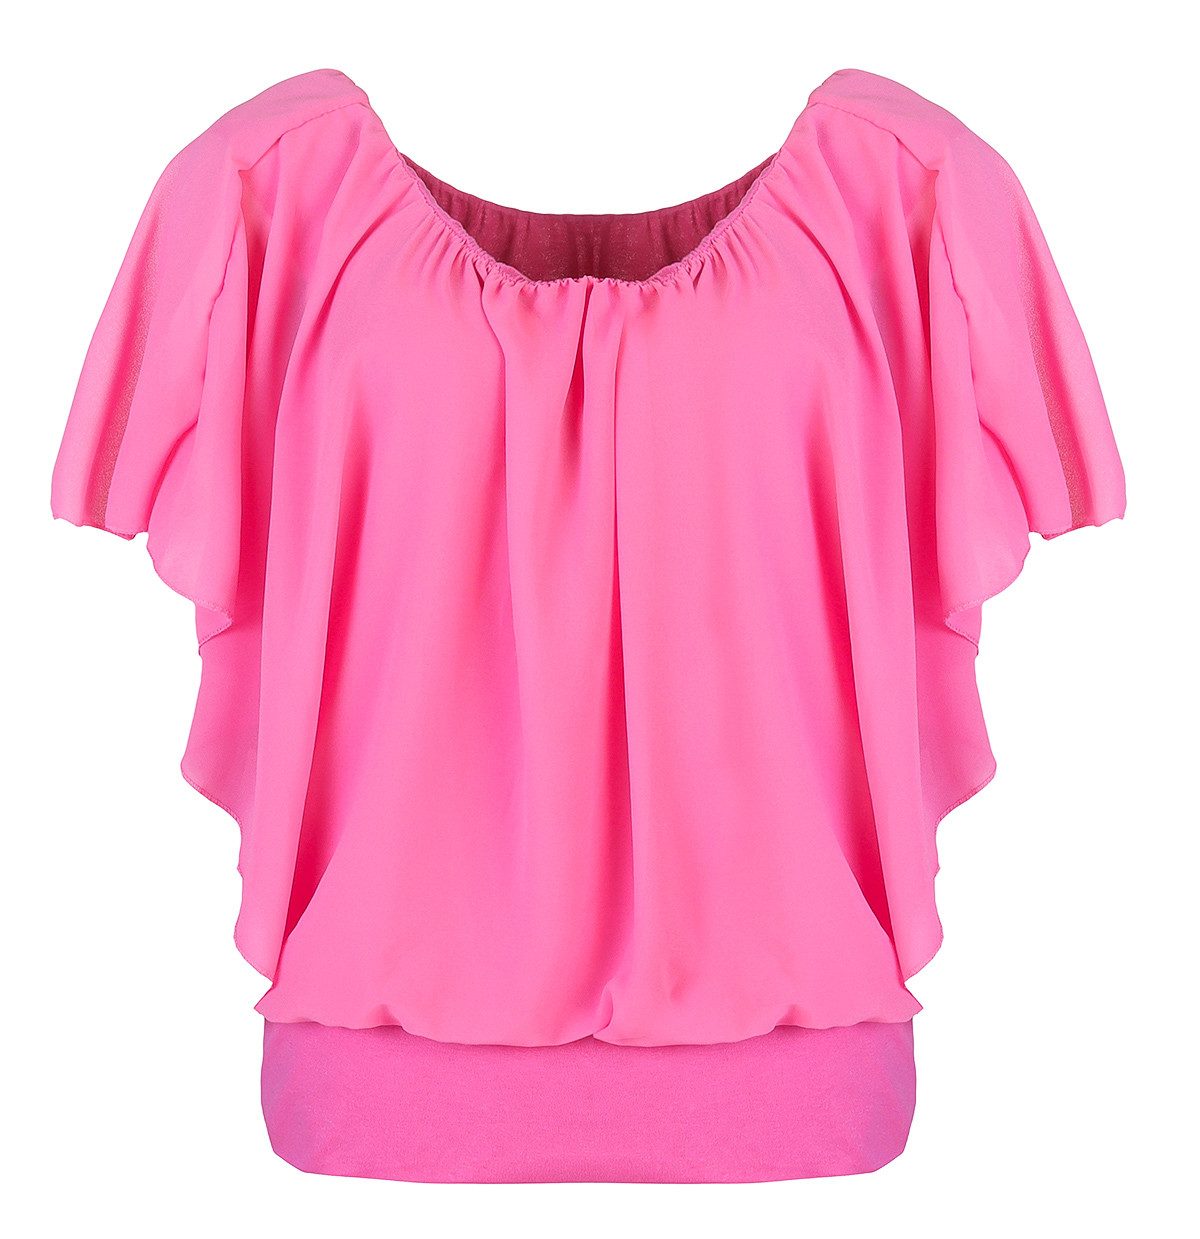 CLEO STYLE Chiffonbluse Damen Bluse 661 42-46 Pink